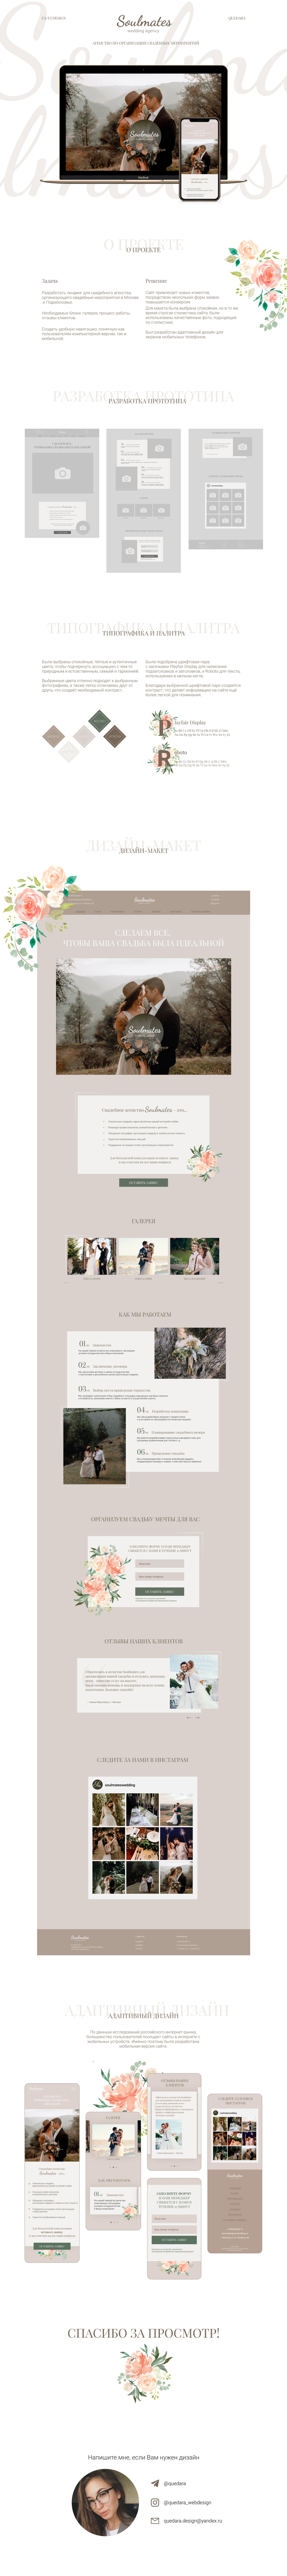 Figma landing page tilda ux/ui wedding wedding agency веб-дизайн дизайн лендинга дизайн сайта лендинг